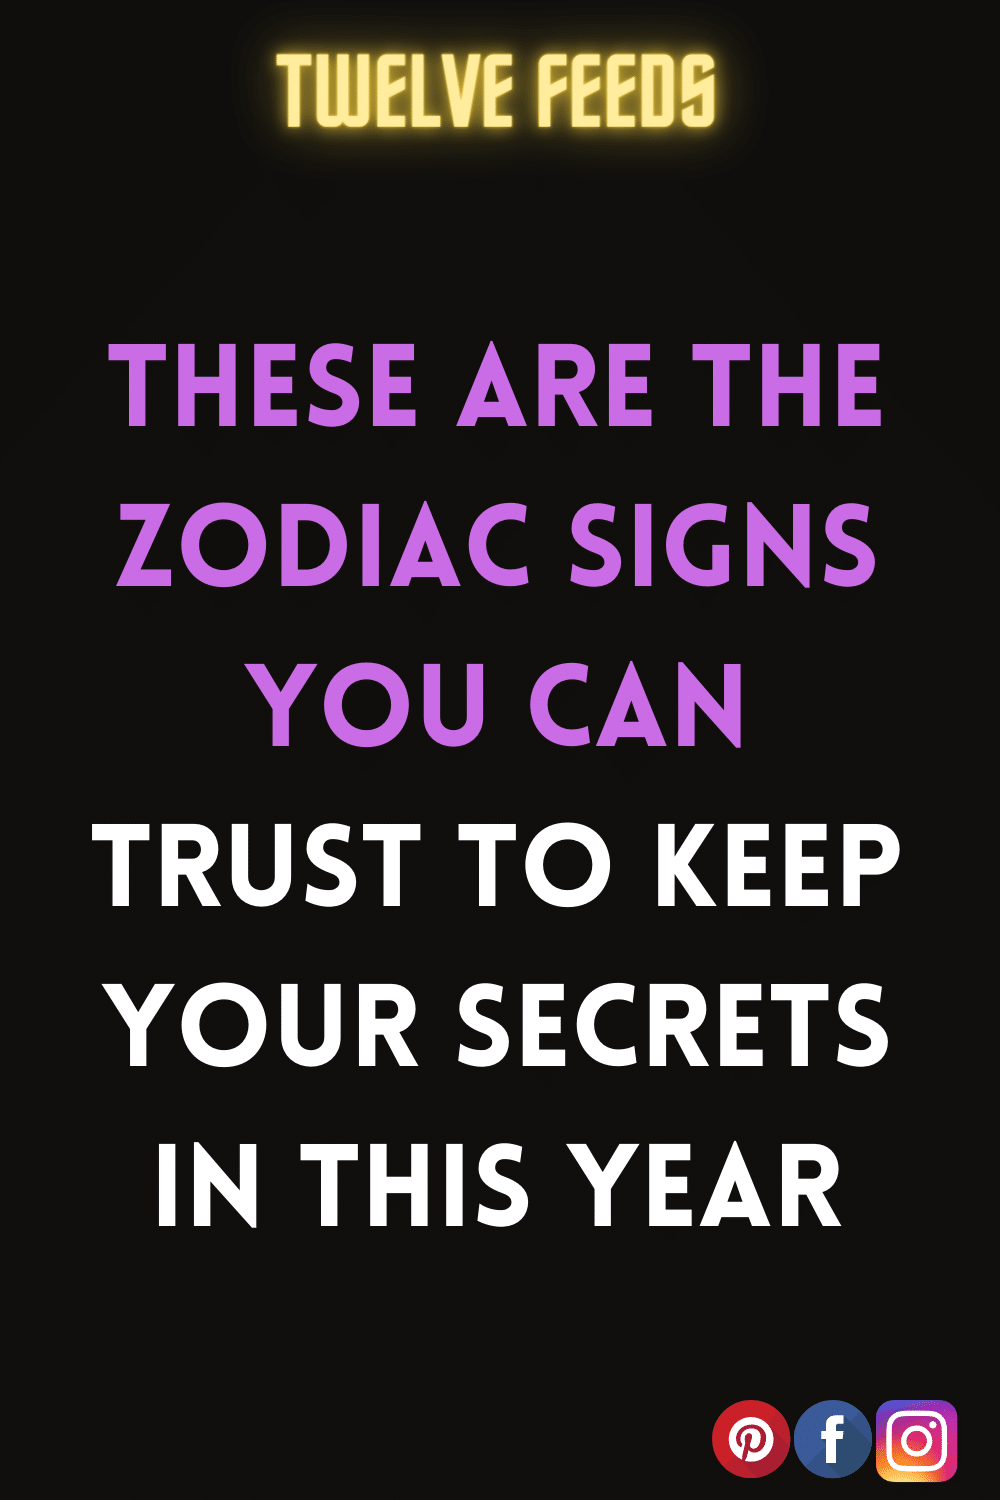 #zodiac #zodiacsigns #zodiacfacts #zodiacseason #zodiaclife #zodiacquotes #zodiaco #zodiacart #zodiacs #zodiacsigntattoos #relationships #zodiaccity #zodiaccompatibility #AriesFacts #CancerFacts #LibraFacts #TaurusFacts #LeoFacts #ScorpioFacts #AquariusFacts #GeminiFacts #VirgoFacts #SagittariusFacts #PiscesFacts #zodiaclove #crystals #astrologyposts 